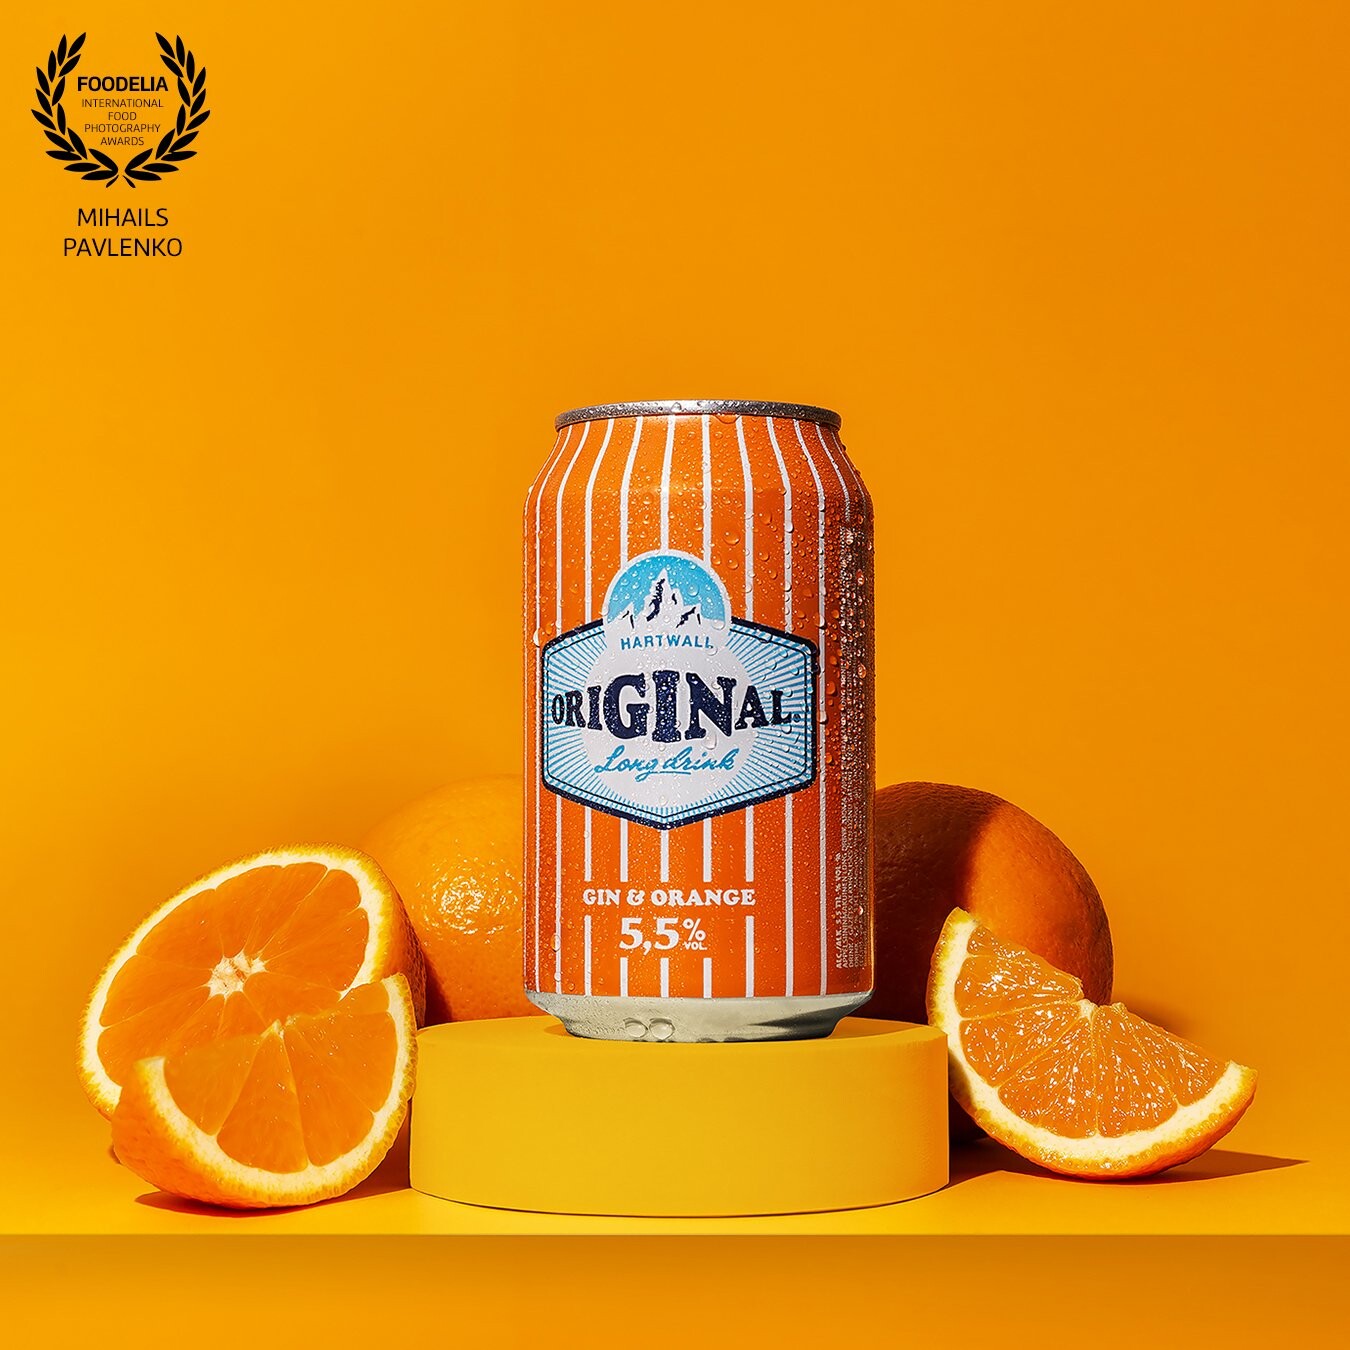 Photo shoot of gin & orange drink by Hartwall Original Long Drink @originallongdrink . Big thanks to @originallongdrink.lv<br />
Made with stylist @karunavolodina and @primoriga